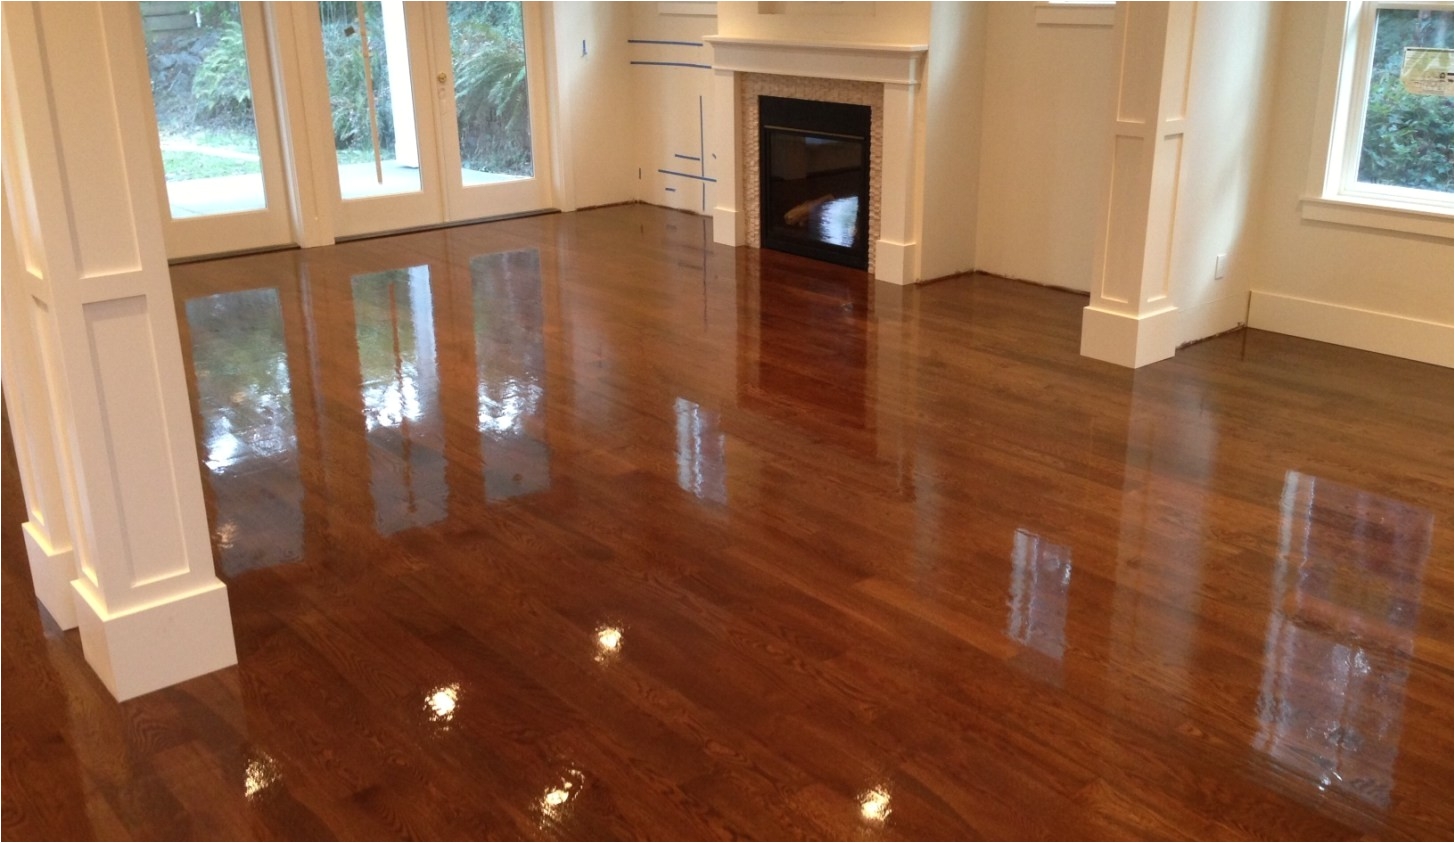 interior marvelous beautiful cleaning laminate floors 3 bona pro hardwood floor cleaner cleaners thrilling of floors